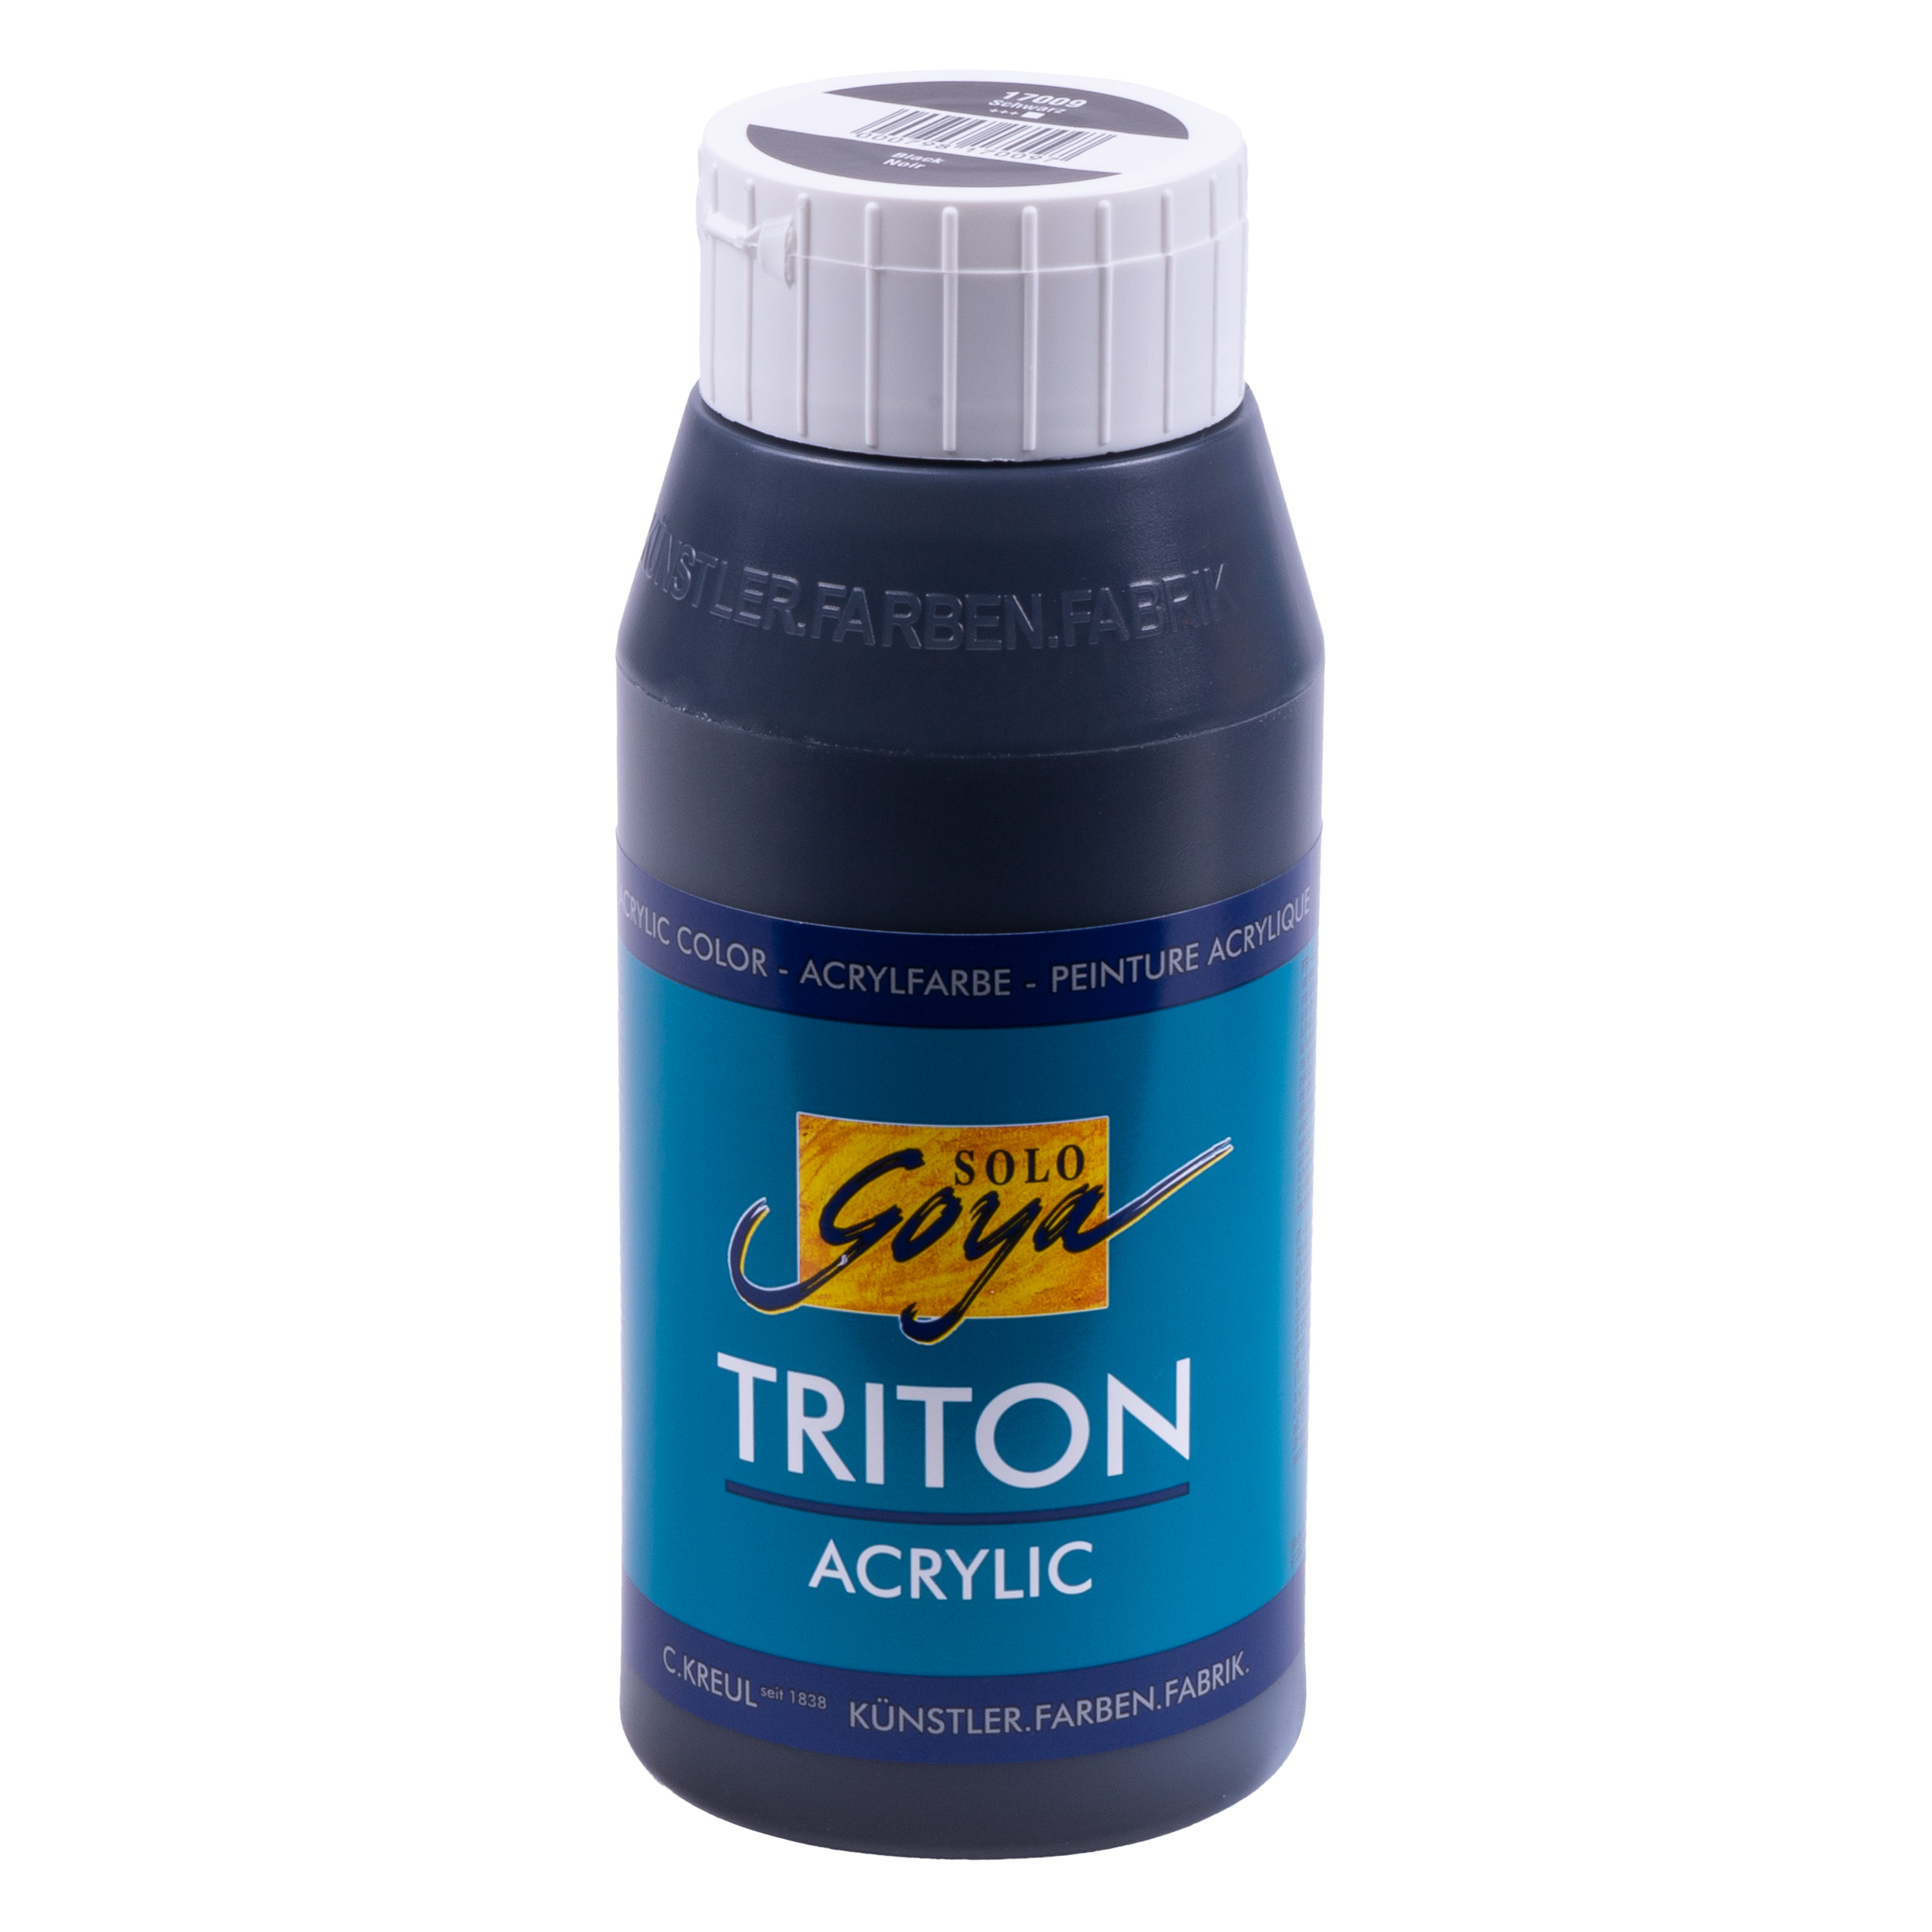 SOLO GOYA Triton Acrylfarbe, schwarz, 750 ml